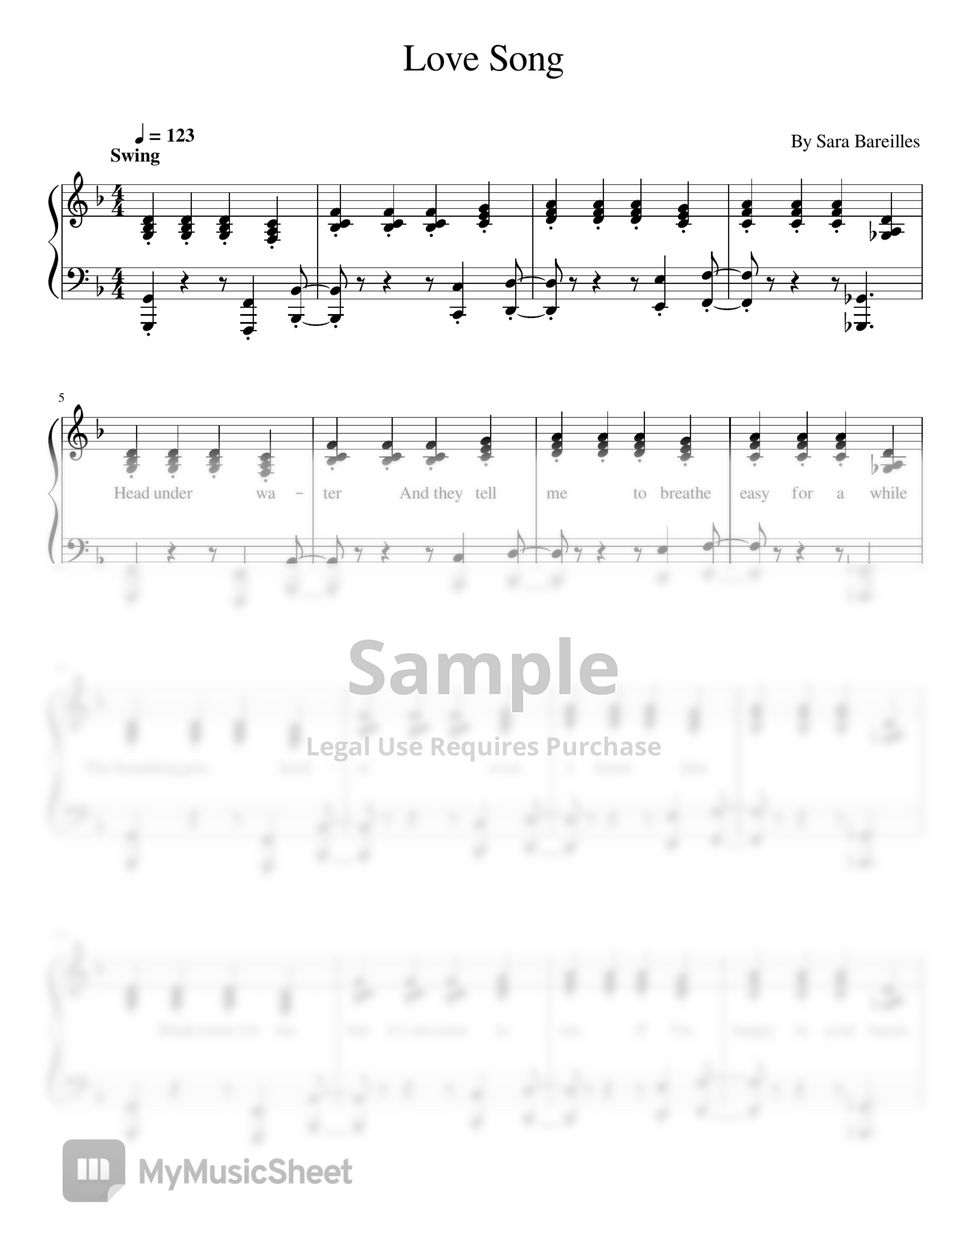 Sara Bareilles - Love Song (Sara Bareilles - For Piano Accompaniment - With Lyrics) by poon